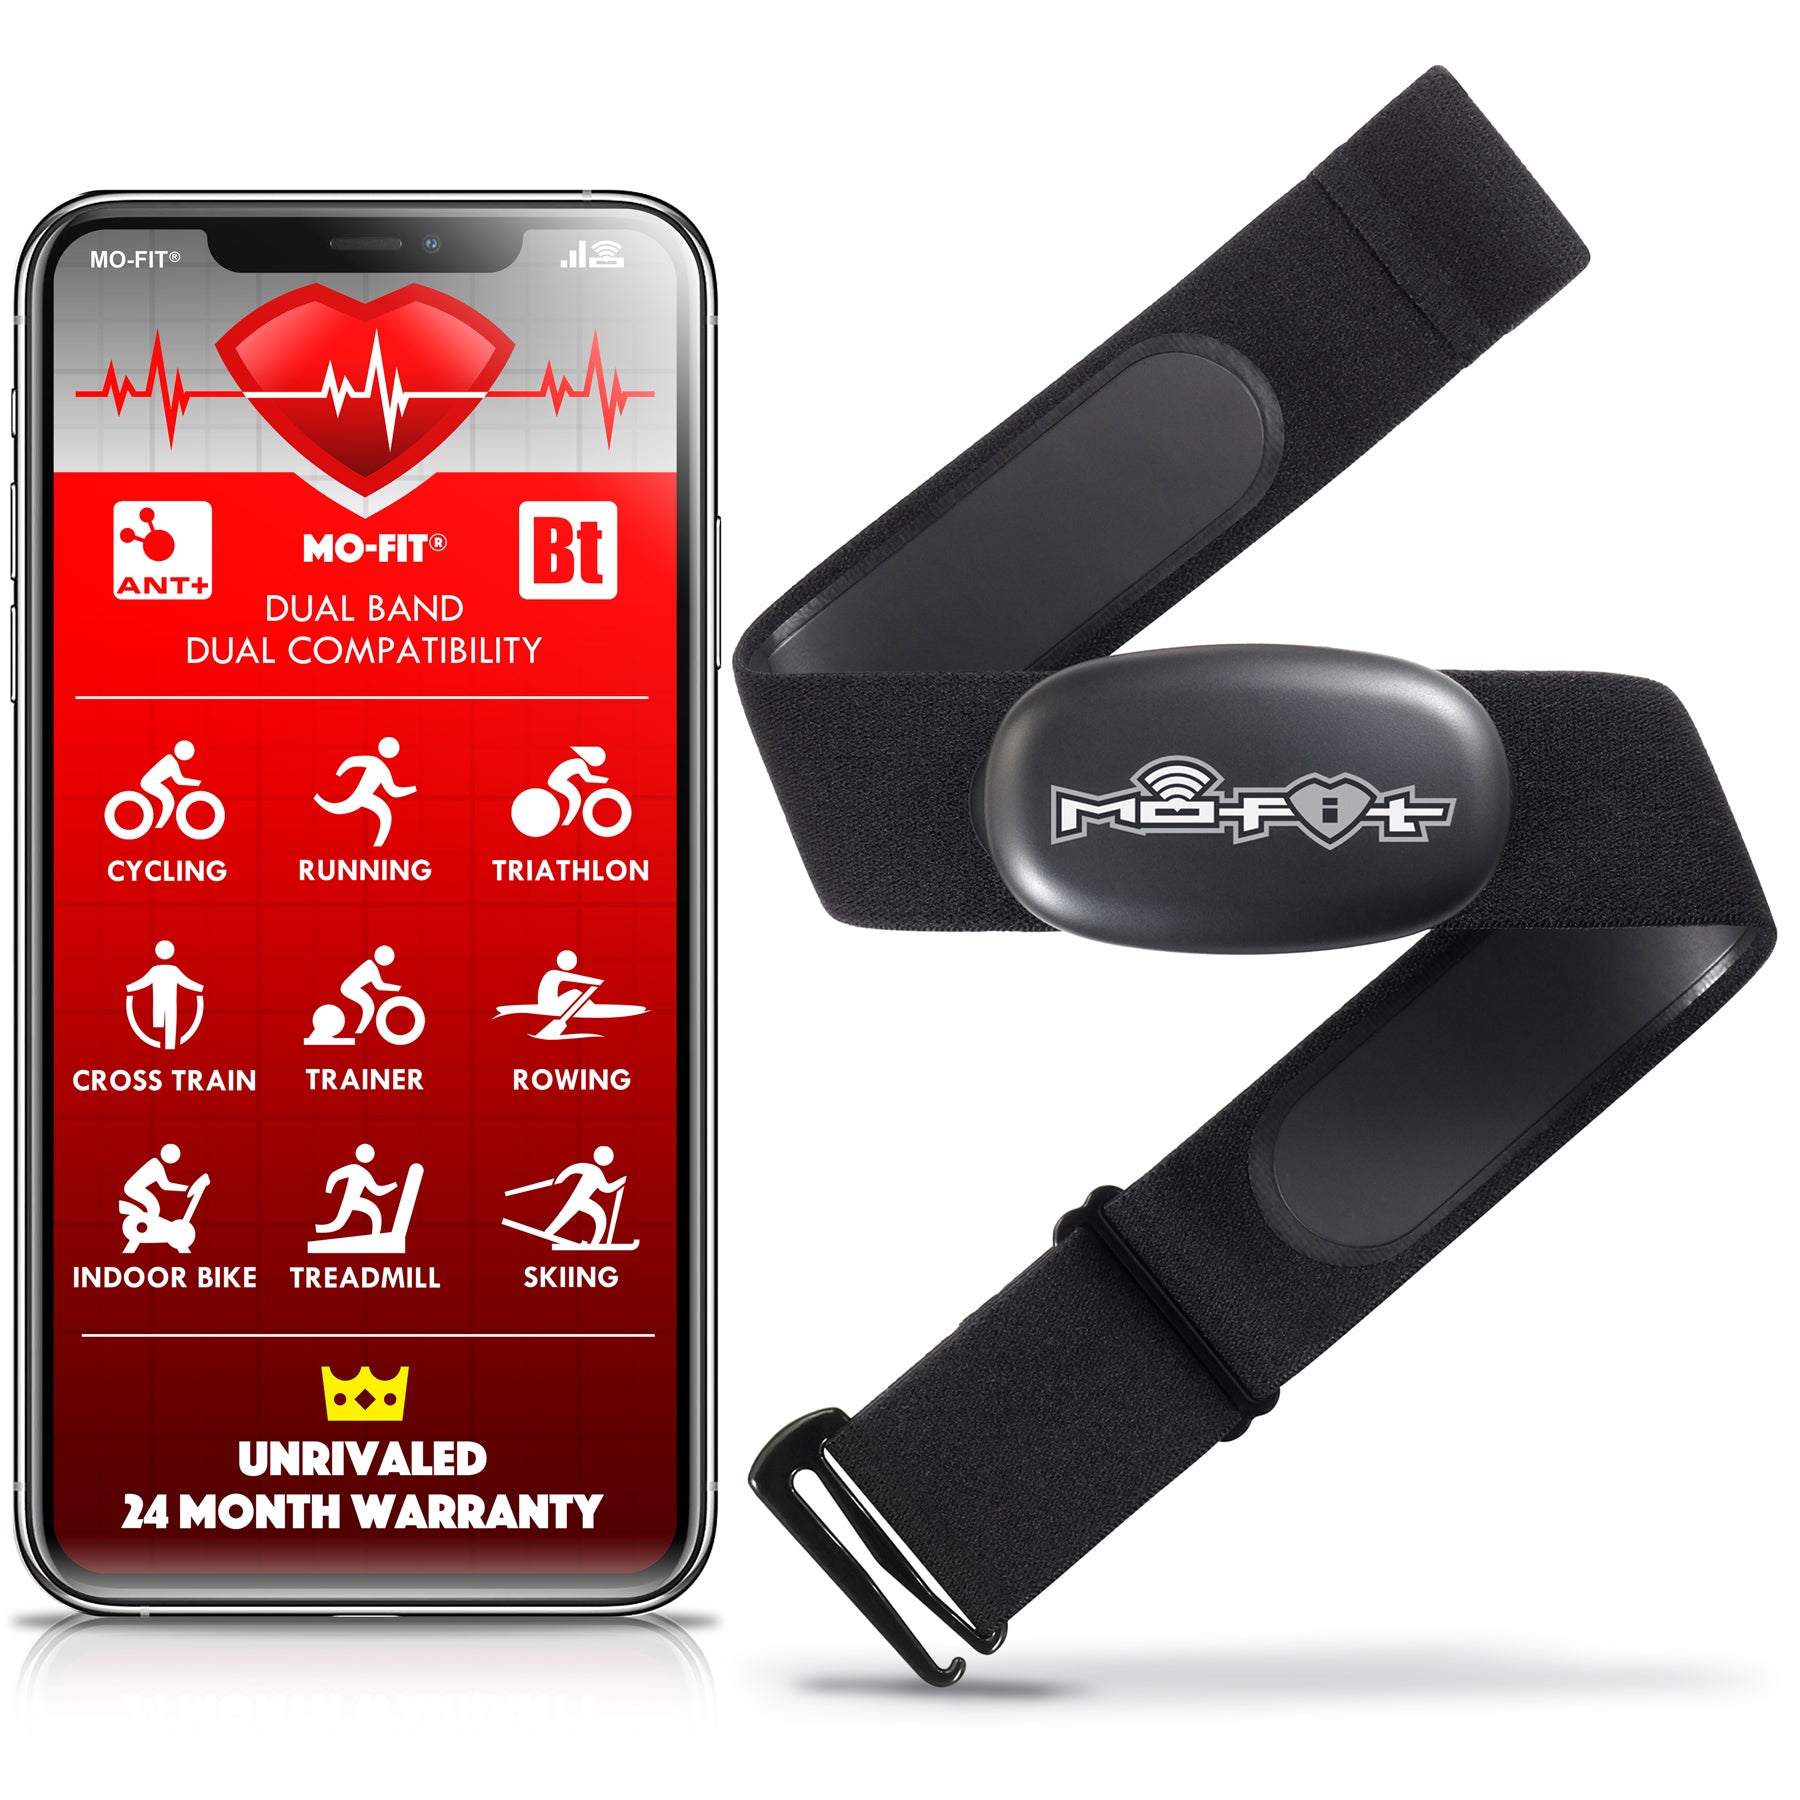 Garmin, Smartwatches & Heart Rate Monitors